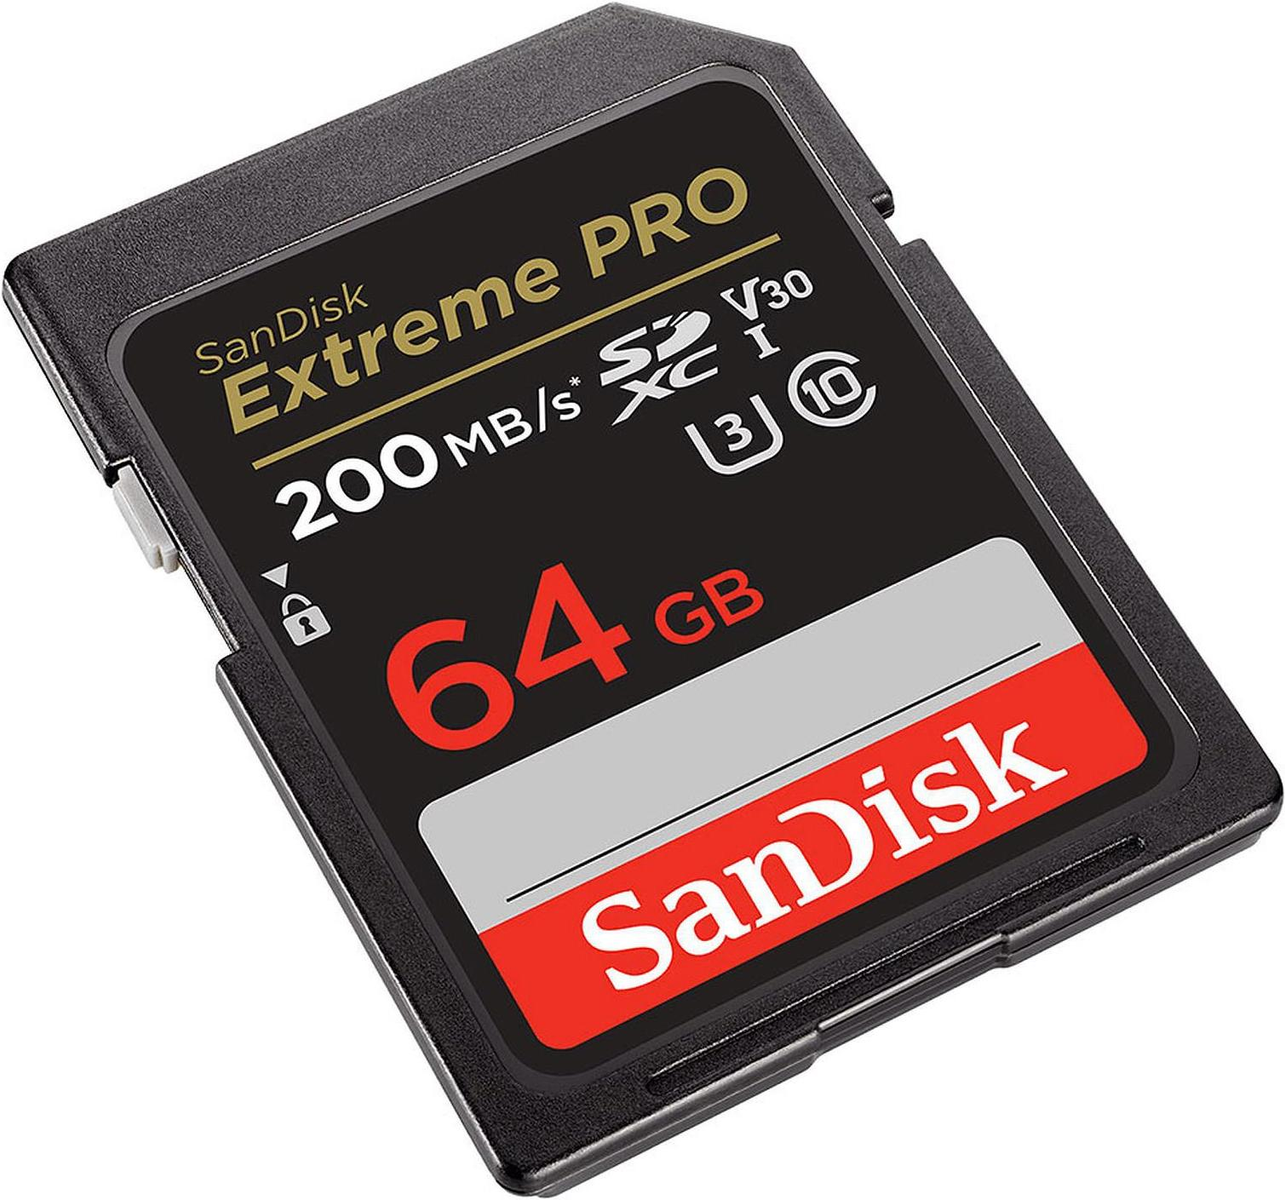 06625NRD, SANDISK GB, Micro-SD, 64 SDXC MB/s 200 Speicherkarte,